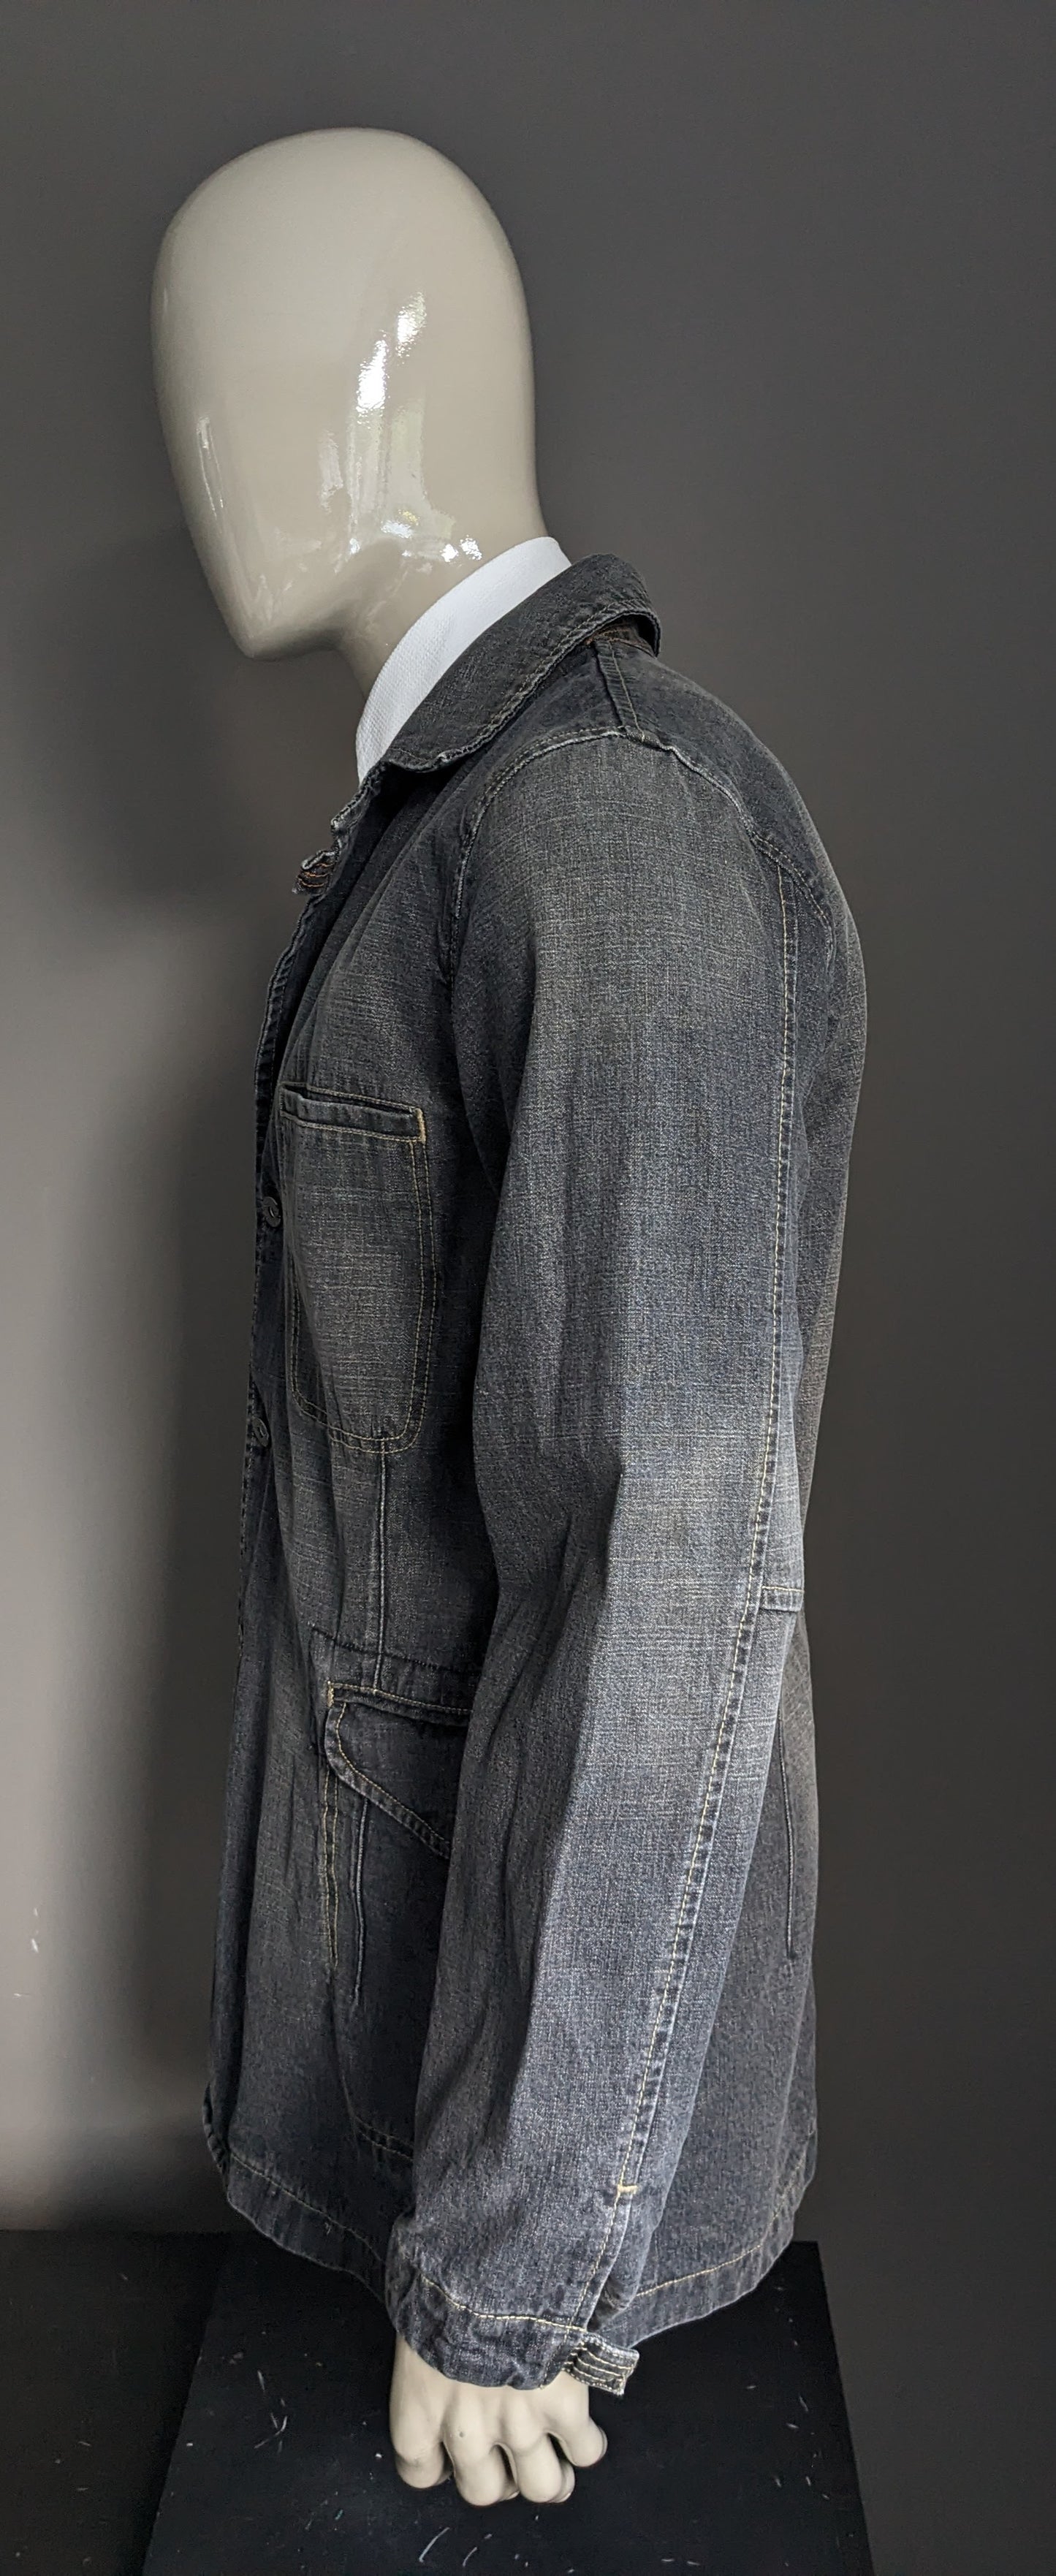 Nautica jeans half -length jens fabric jacket/ jacket. Gray black colored. Size M.